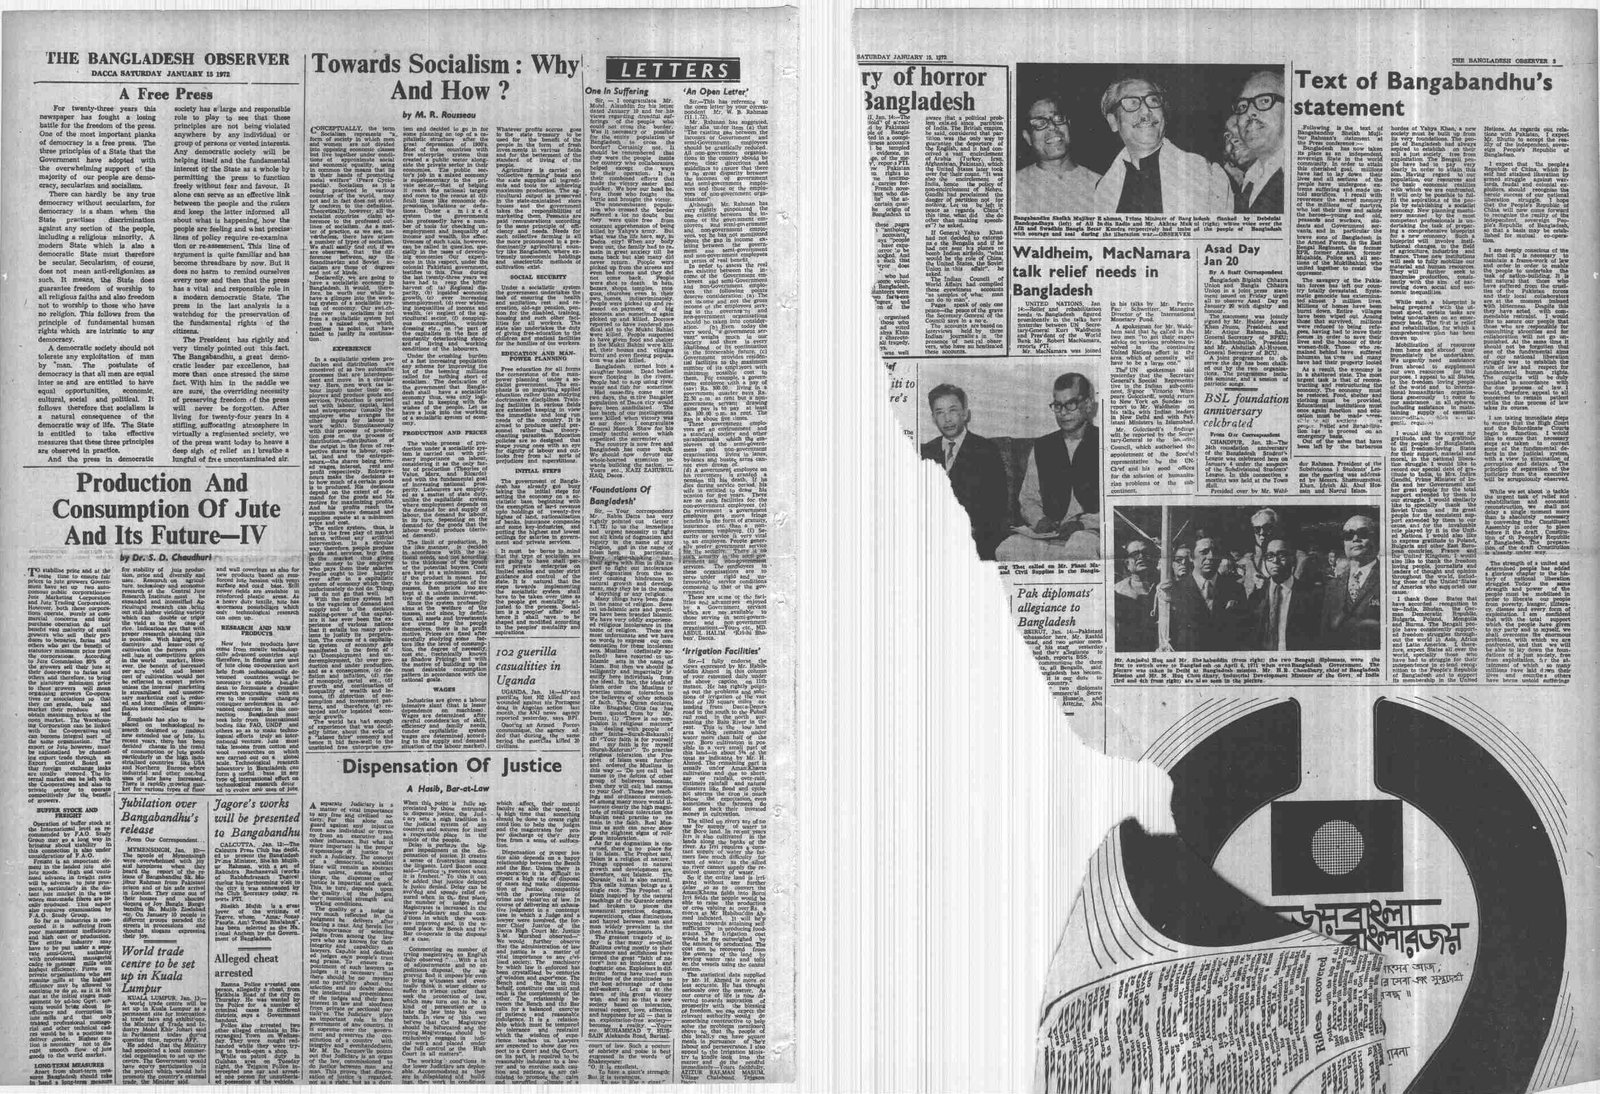 15JAN1972-Bangladesh Observer-Regular-Page 2 and 5